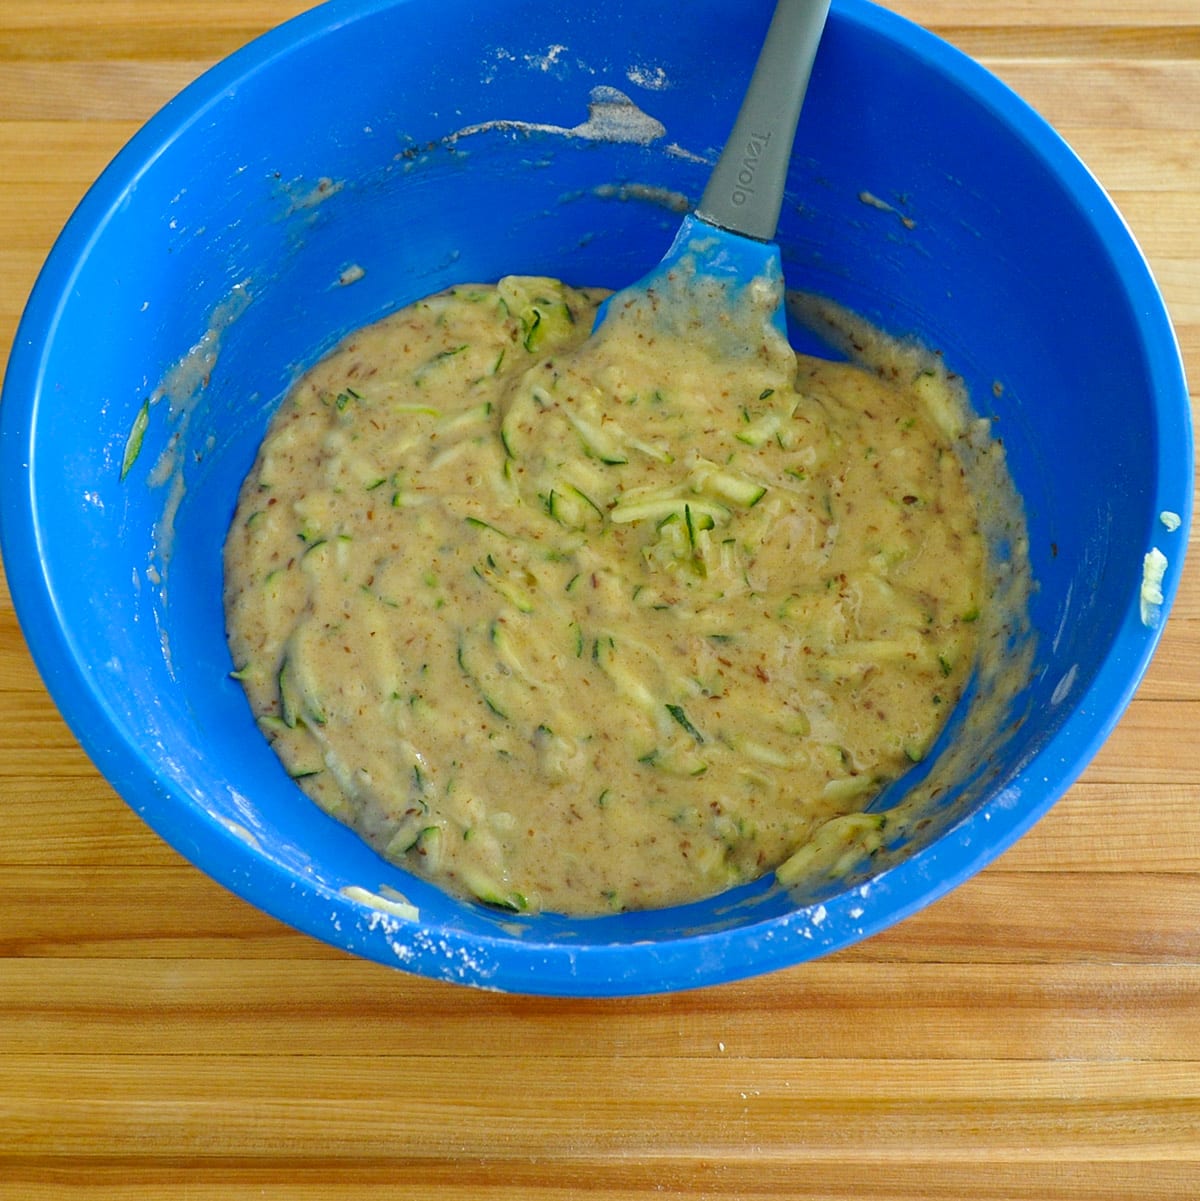 Mixed zucchini muffin batter in a blue bowl